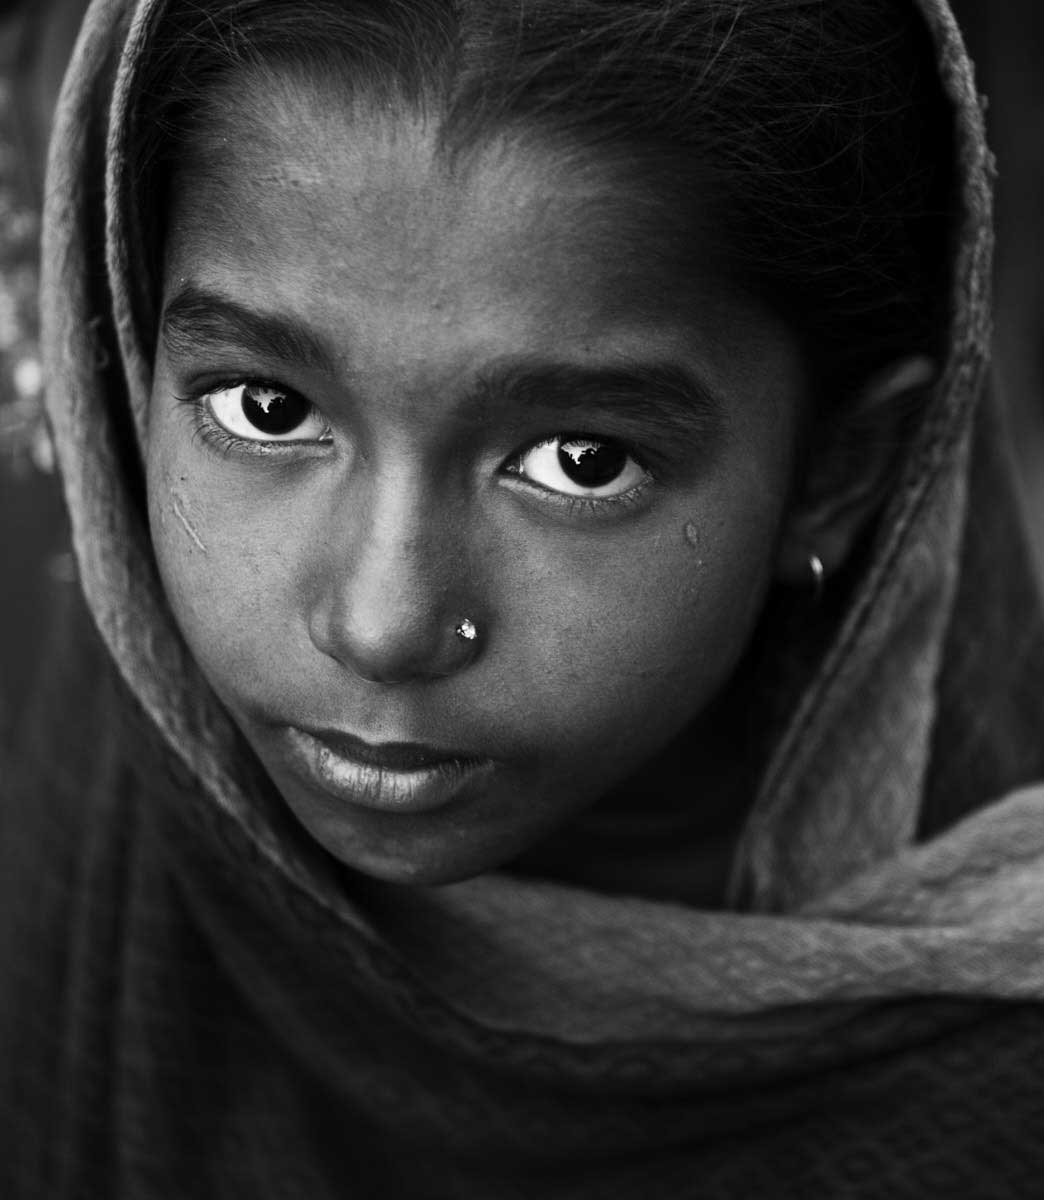 Dhaka; Urban portraits by Jan Møller Hansen